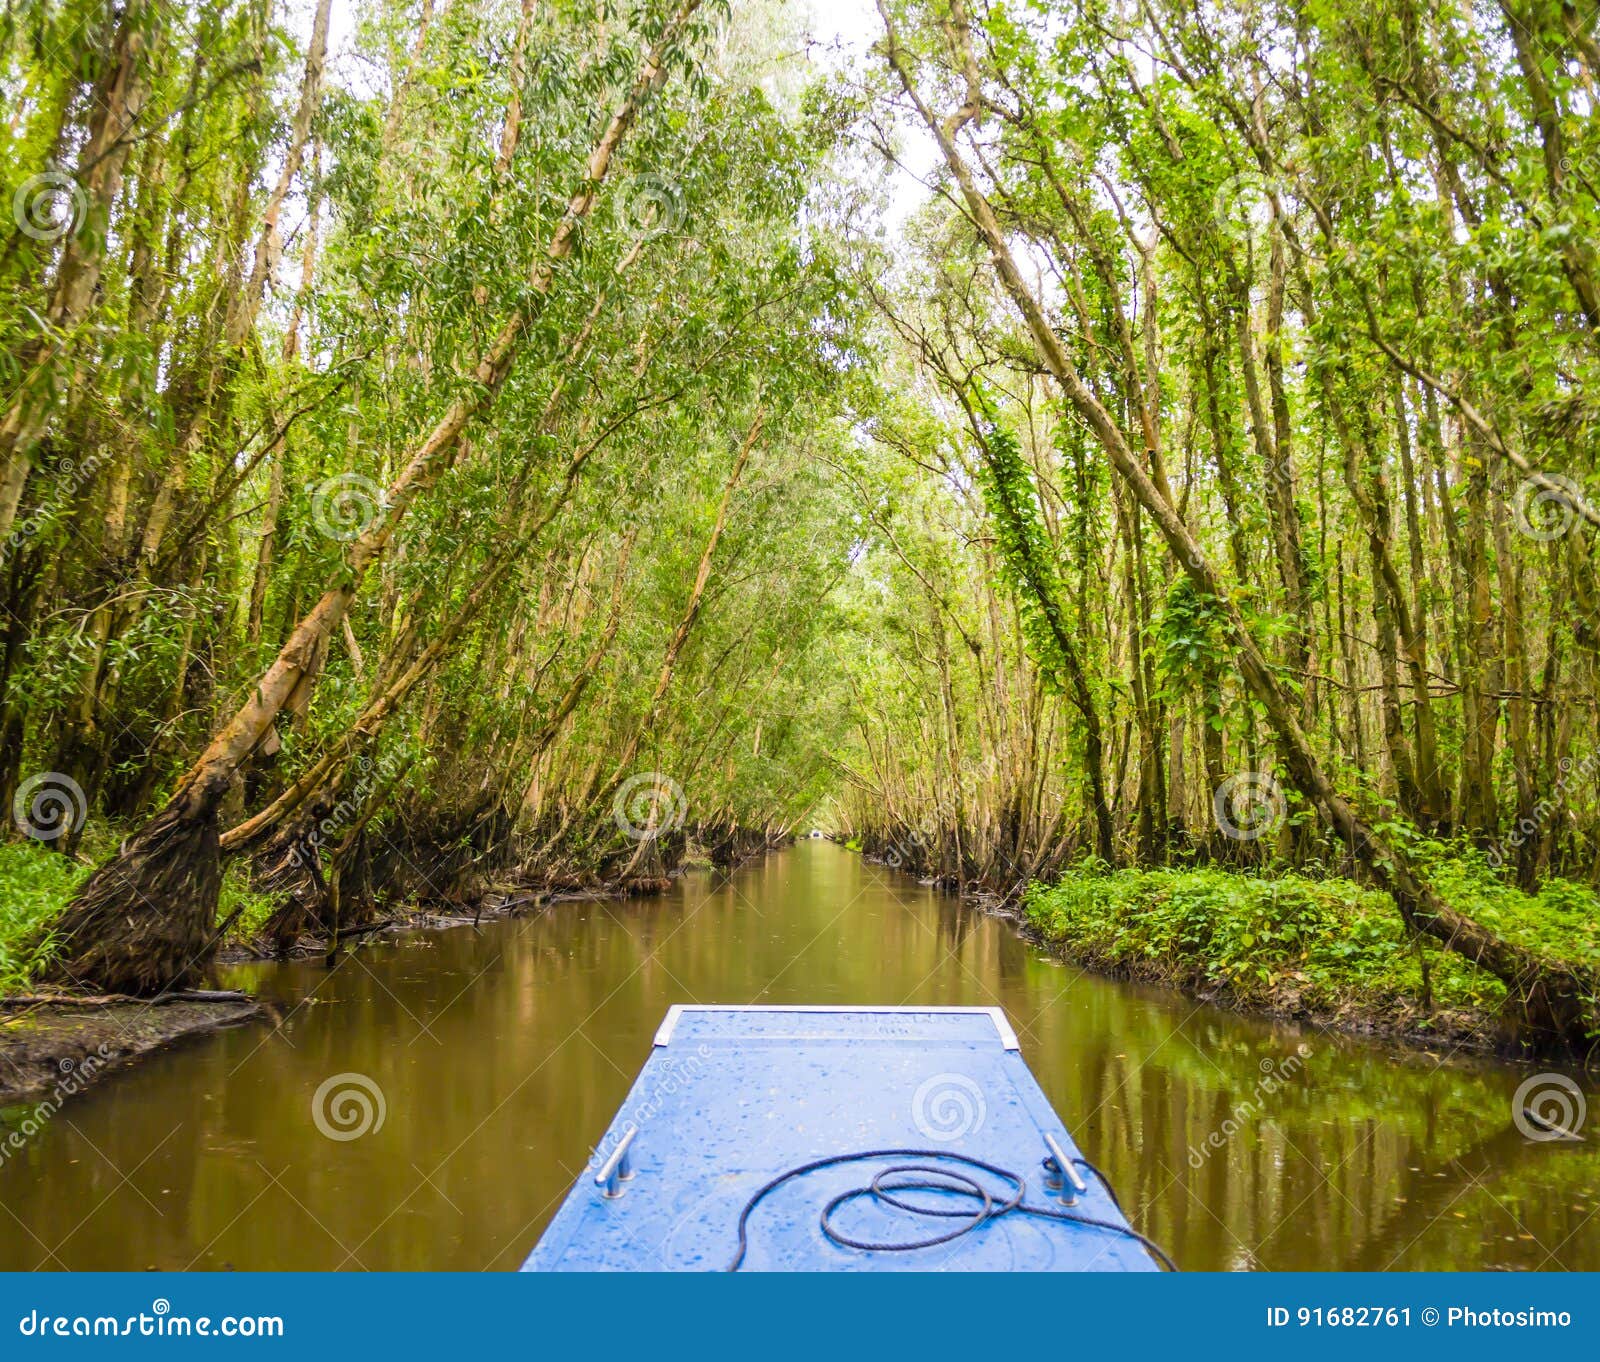 tra su mangrove forest, mekong delta, vietnam